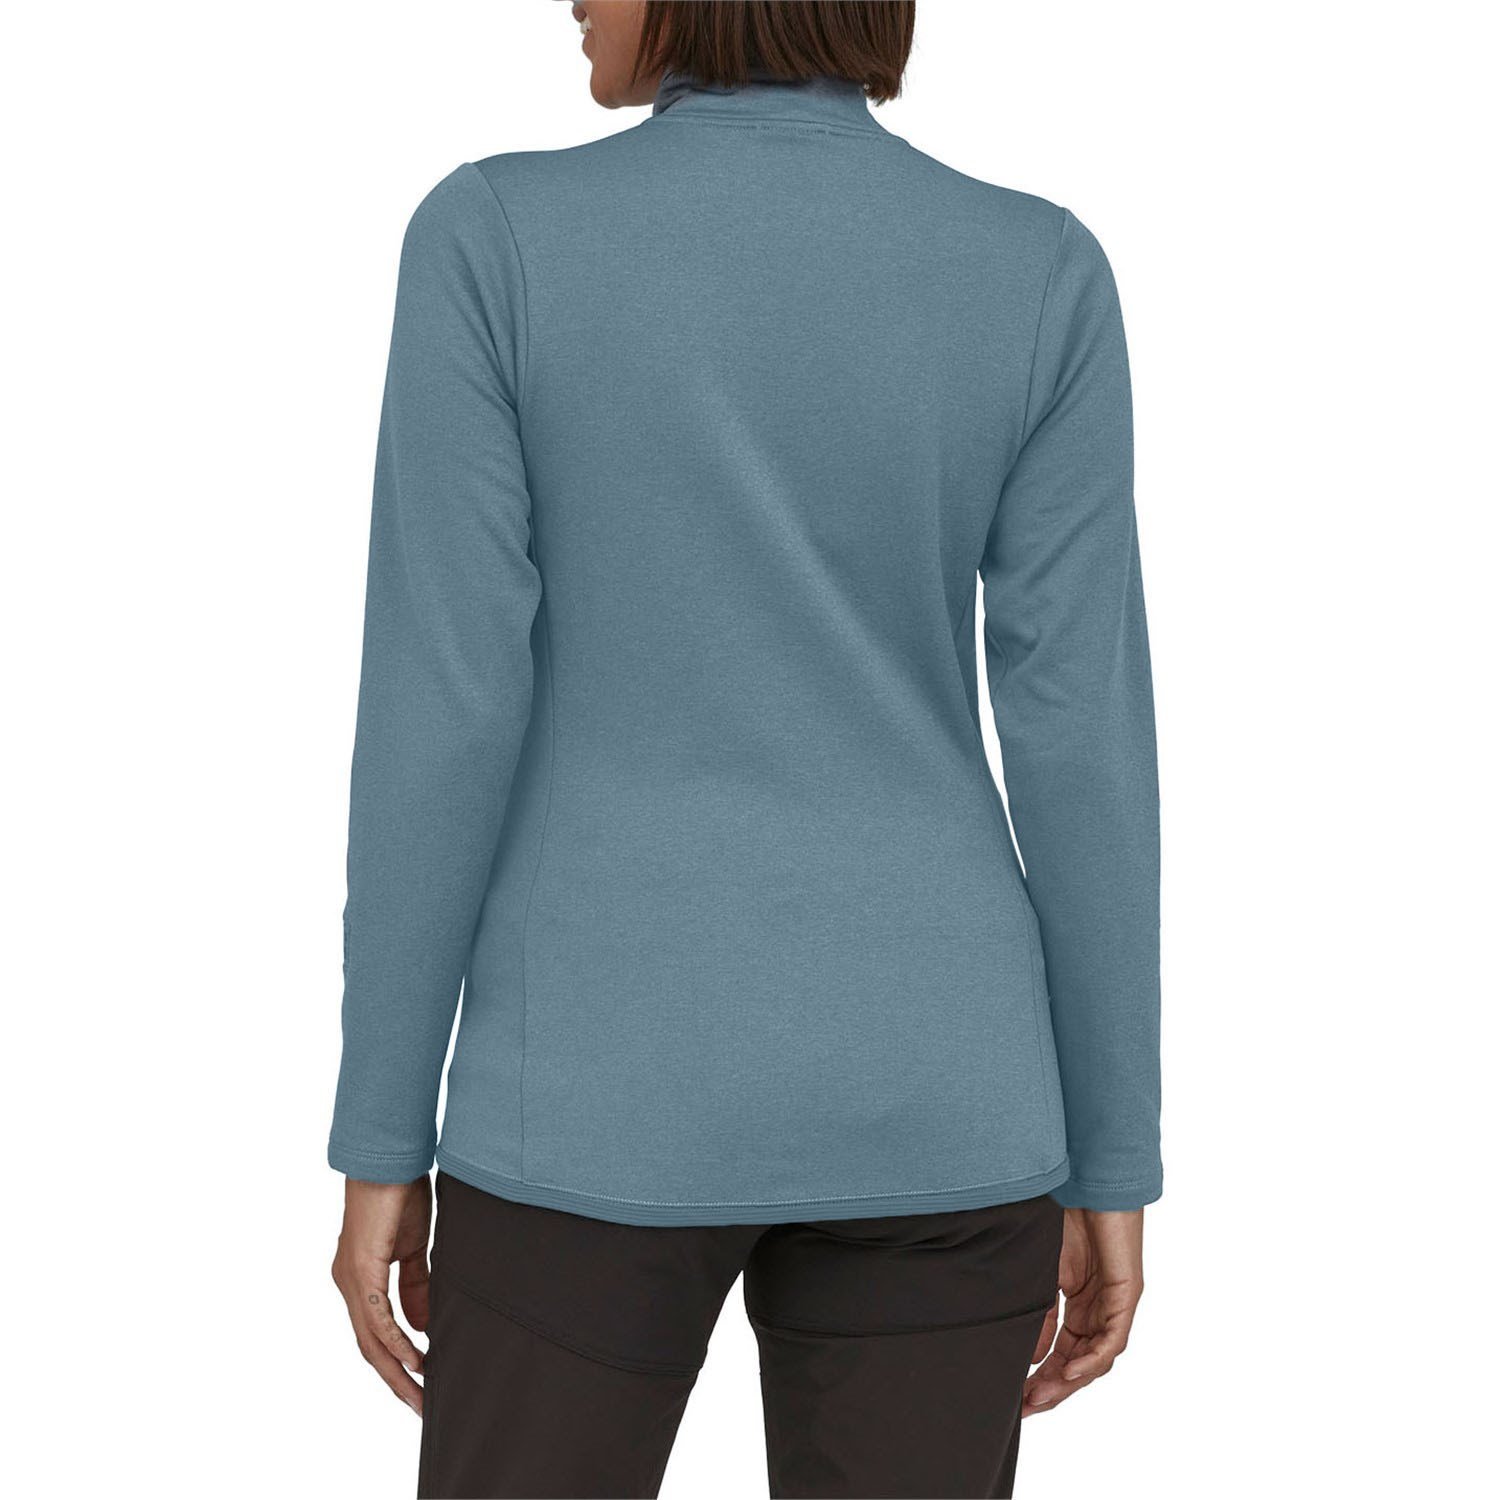 Patagonia Women's R1® Daily Layering Jacket